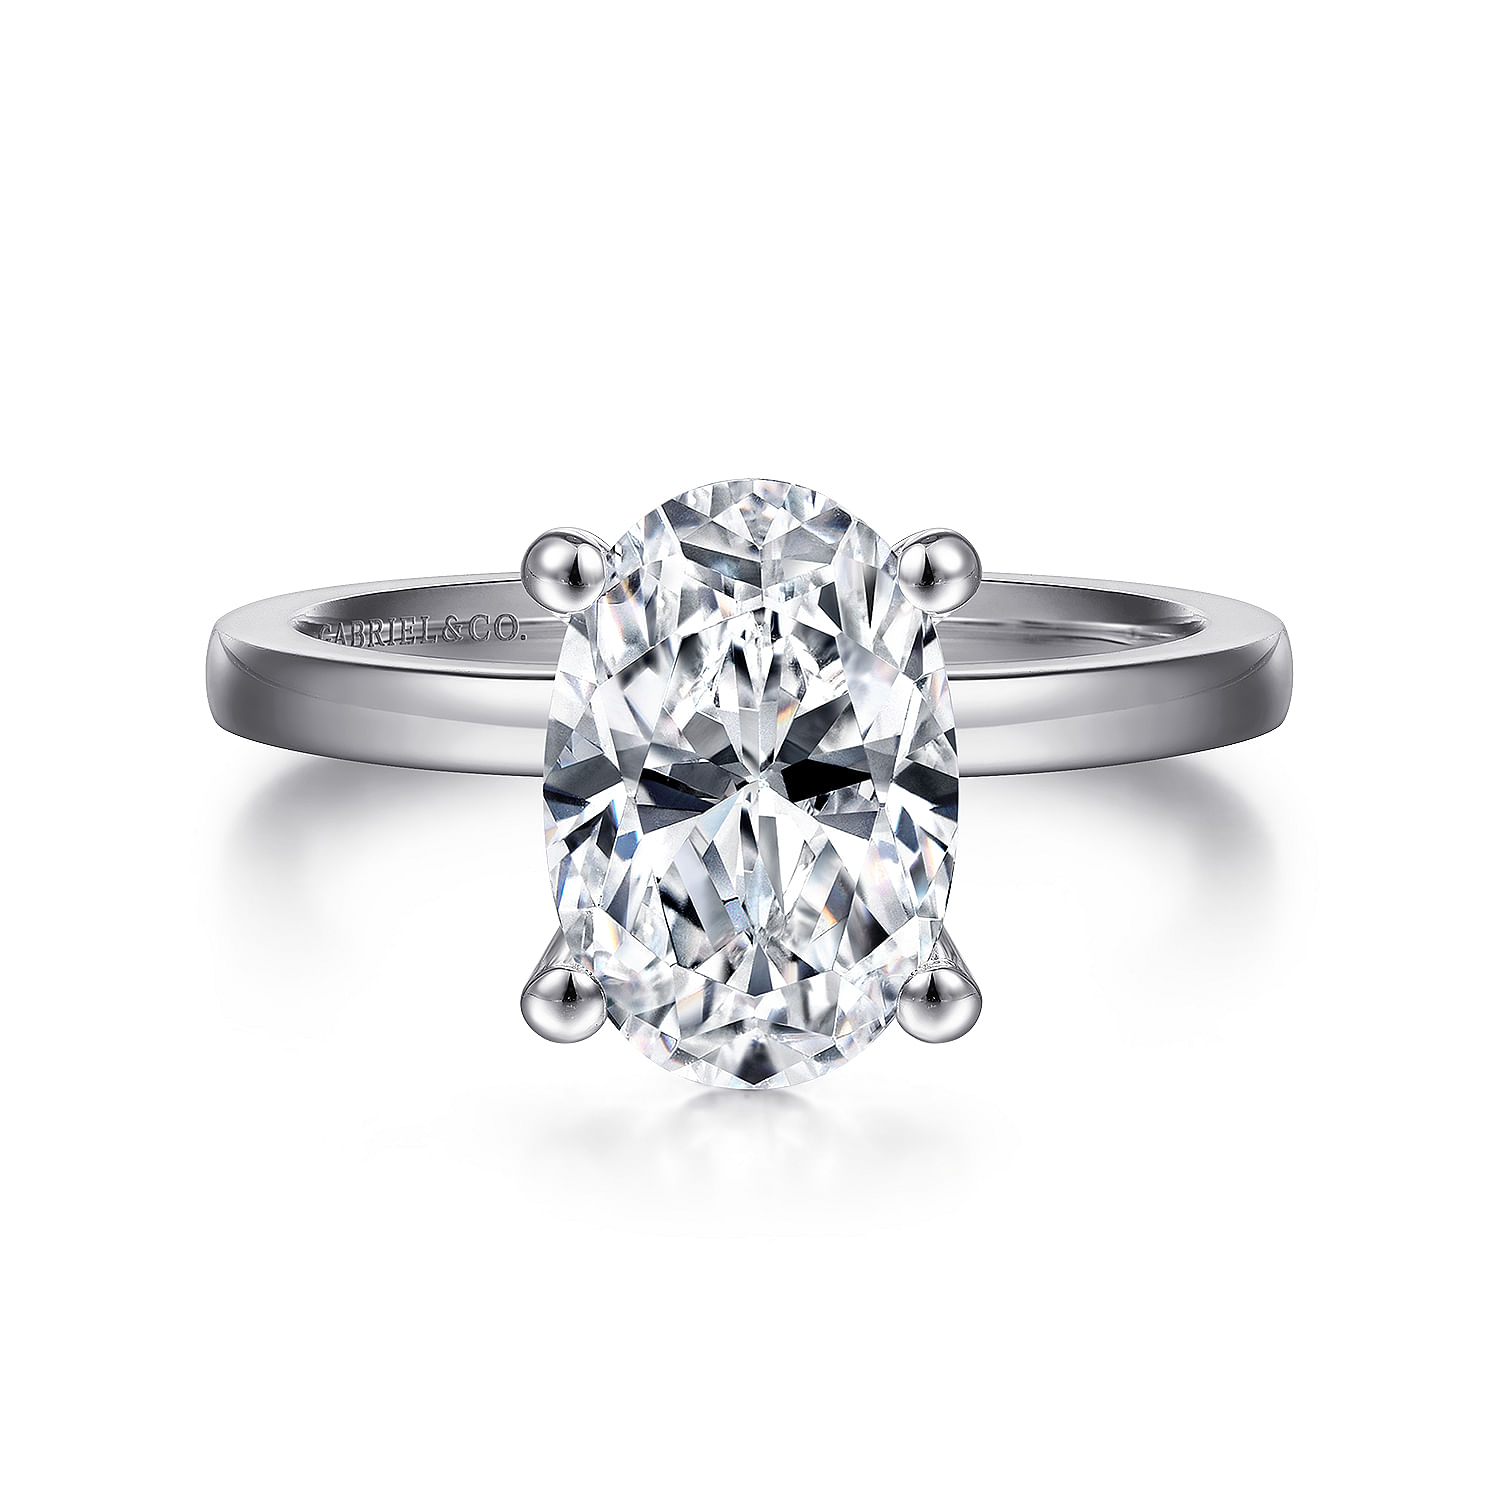 Paula - 14K White Gold Oval Diamond Engagement Ring